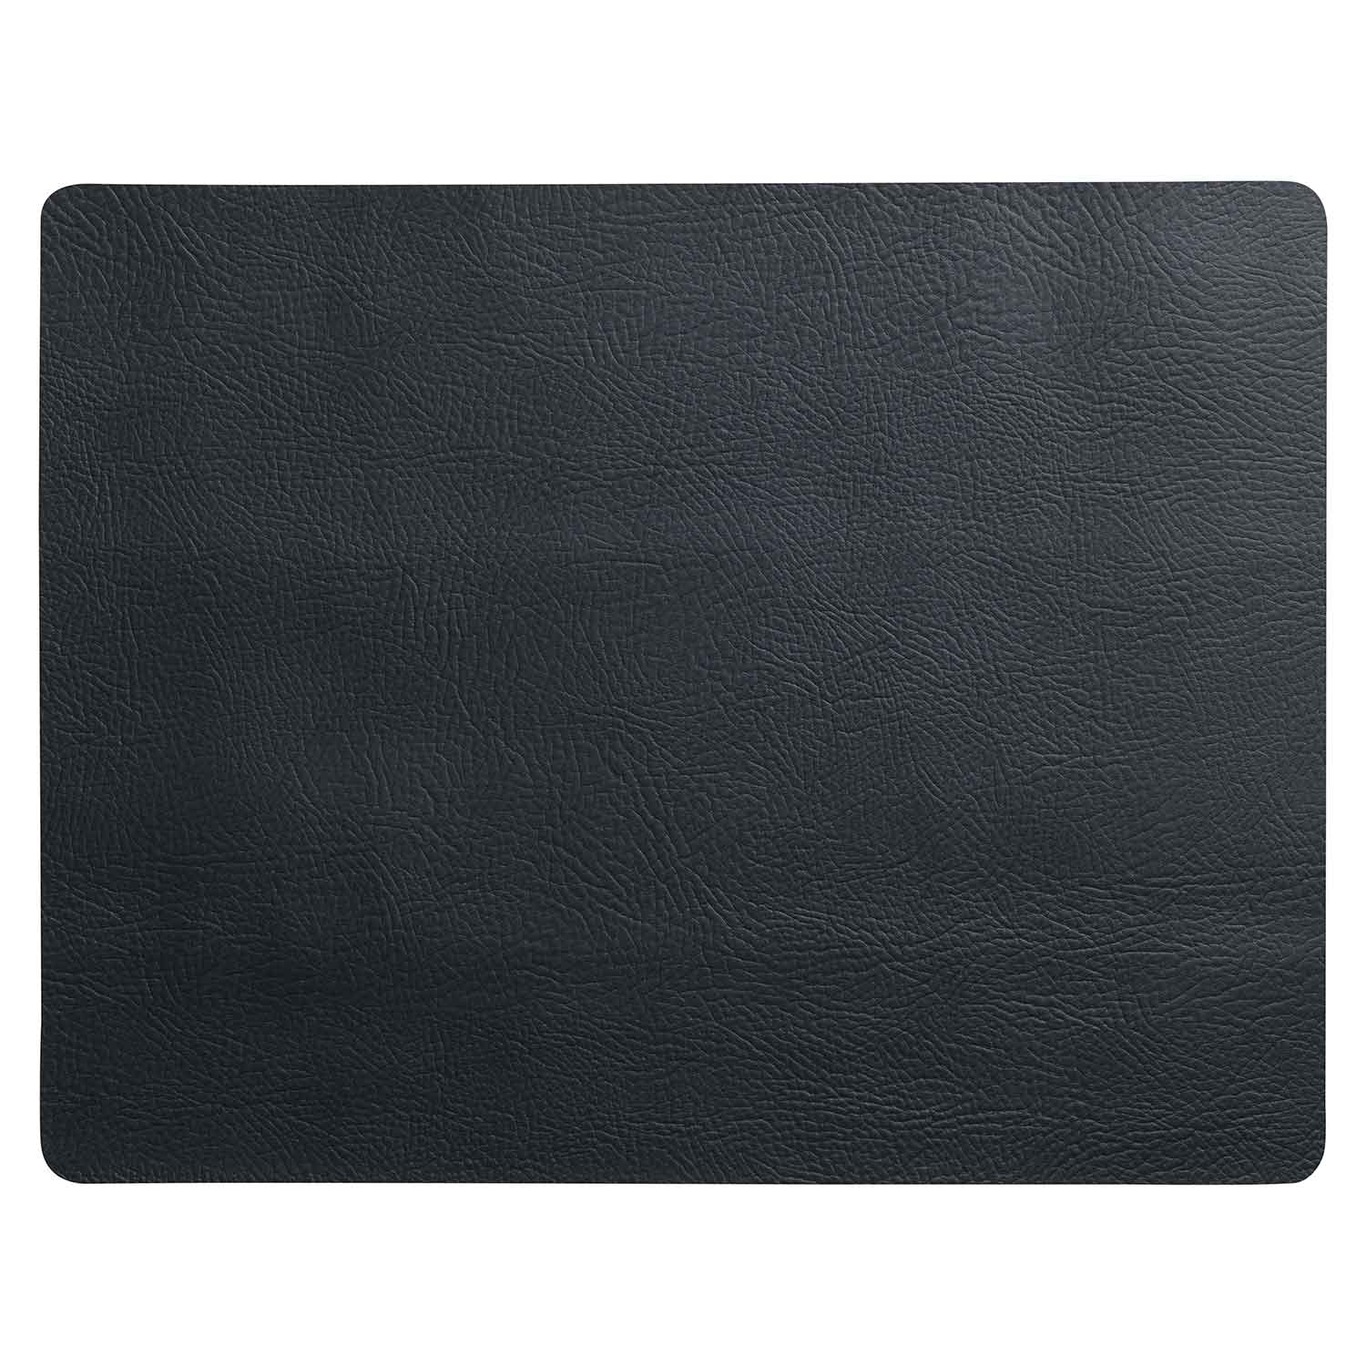 Quadro Placemat 45x35 cm, Black